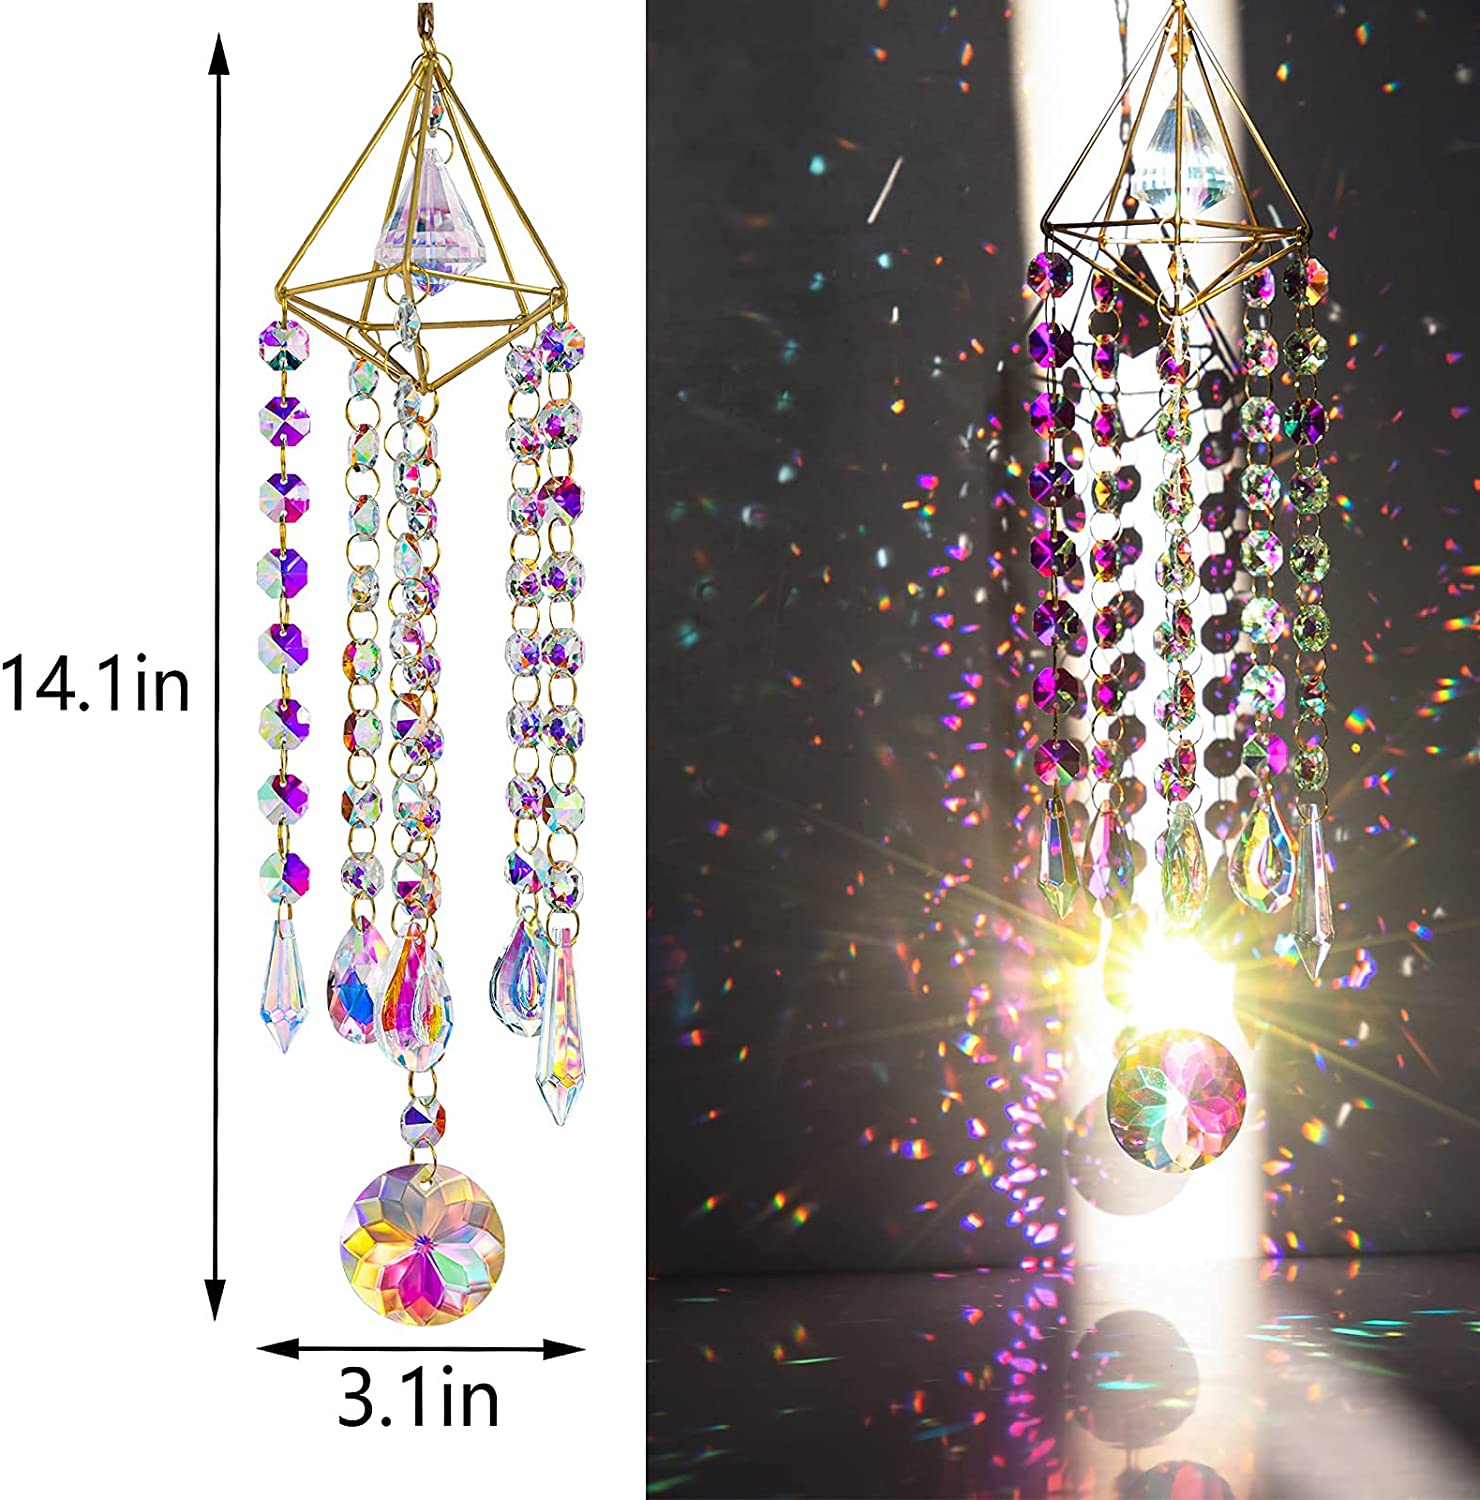 1 H&D HYALINE & DORA Crystals Ball Prisms Suncatcher Hanging Ornament  Hanger Rainbow Maker with Hook